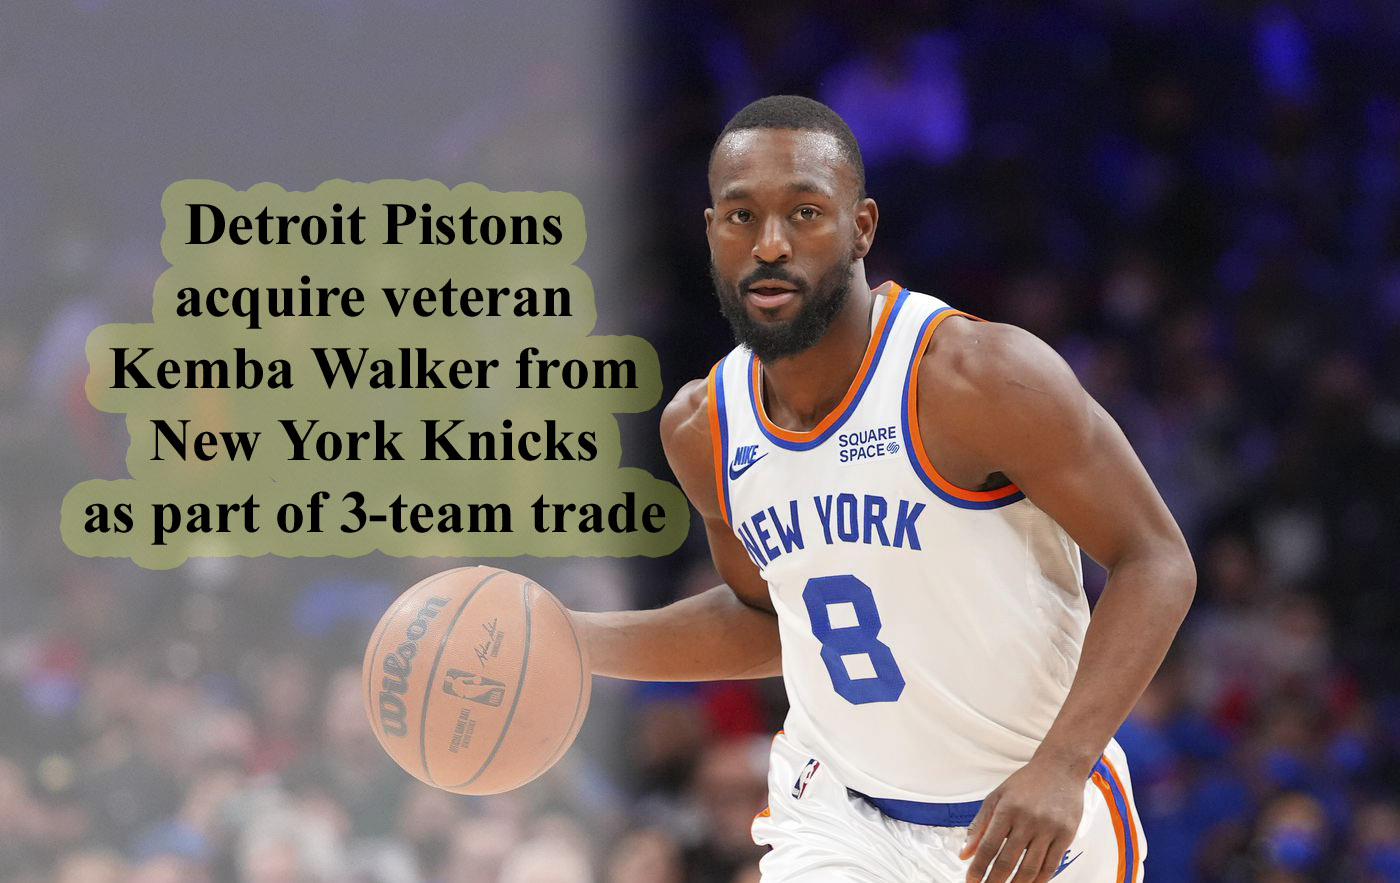 Detroit Pistons acquire veteran Kemba Walker from New York Knicks as part of 3-team trade